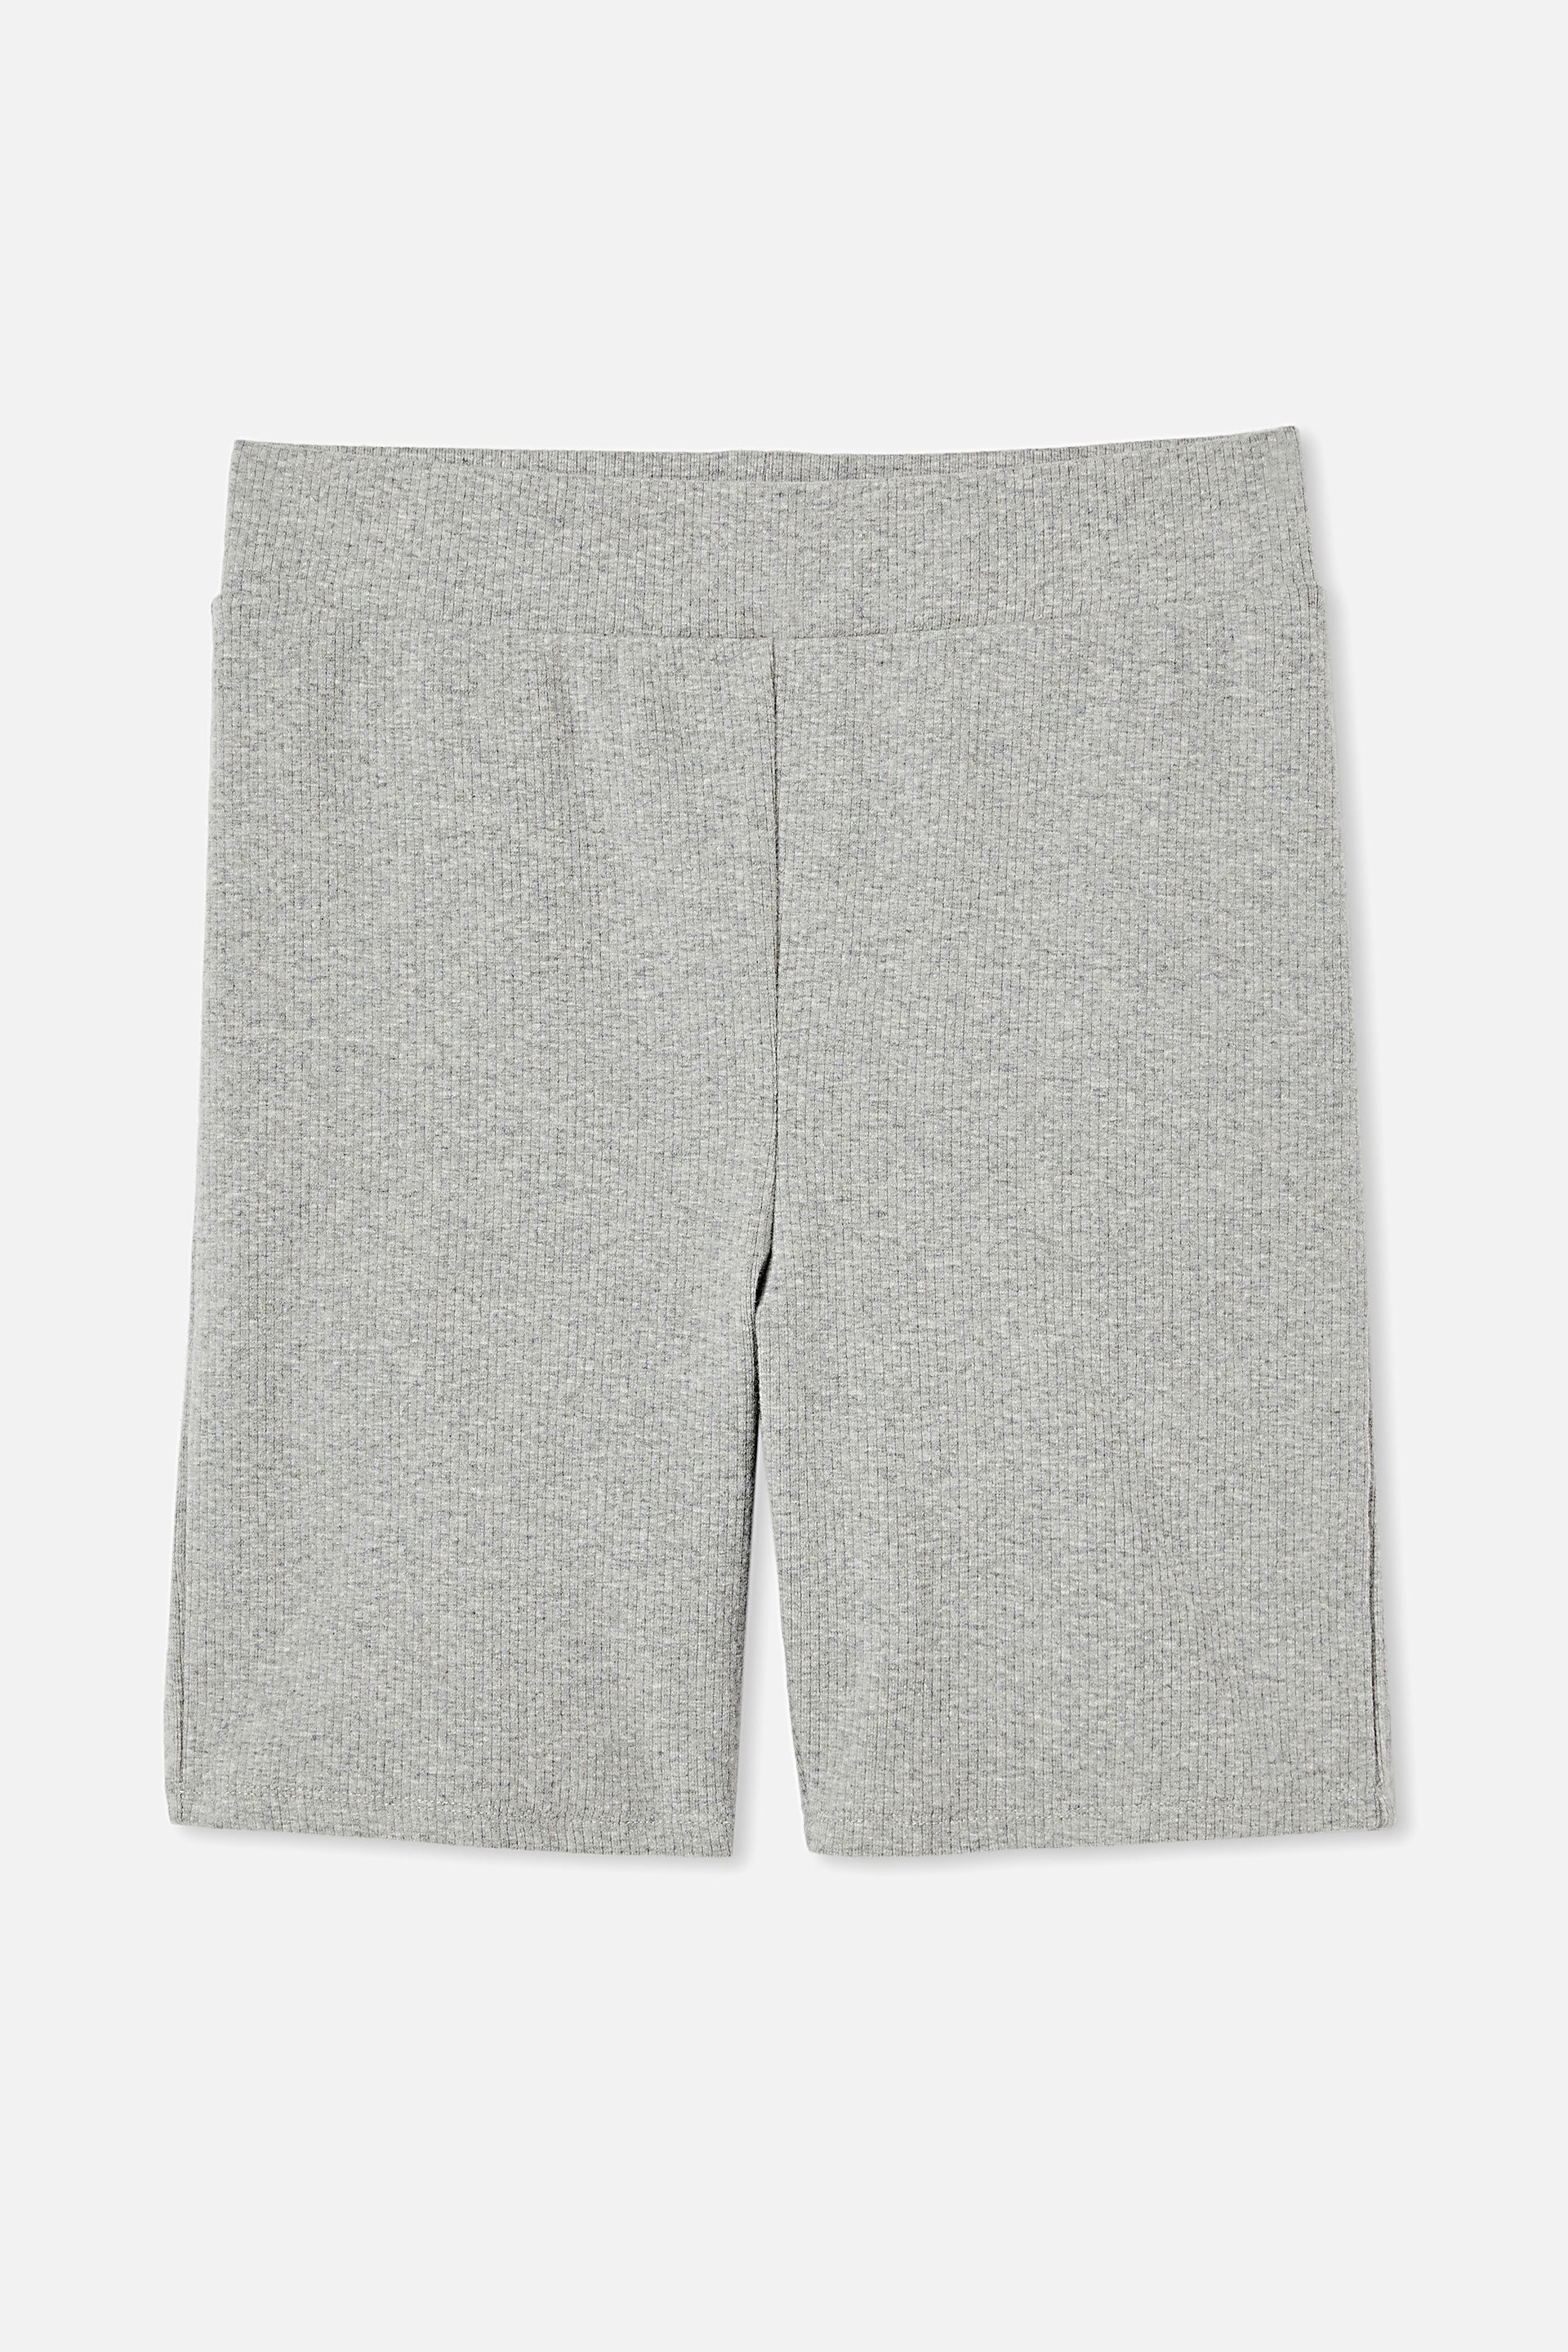 The Beverly Rib Bike Shorts | Cotton On (ANZ)